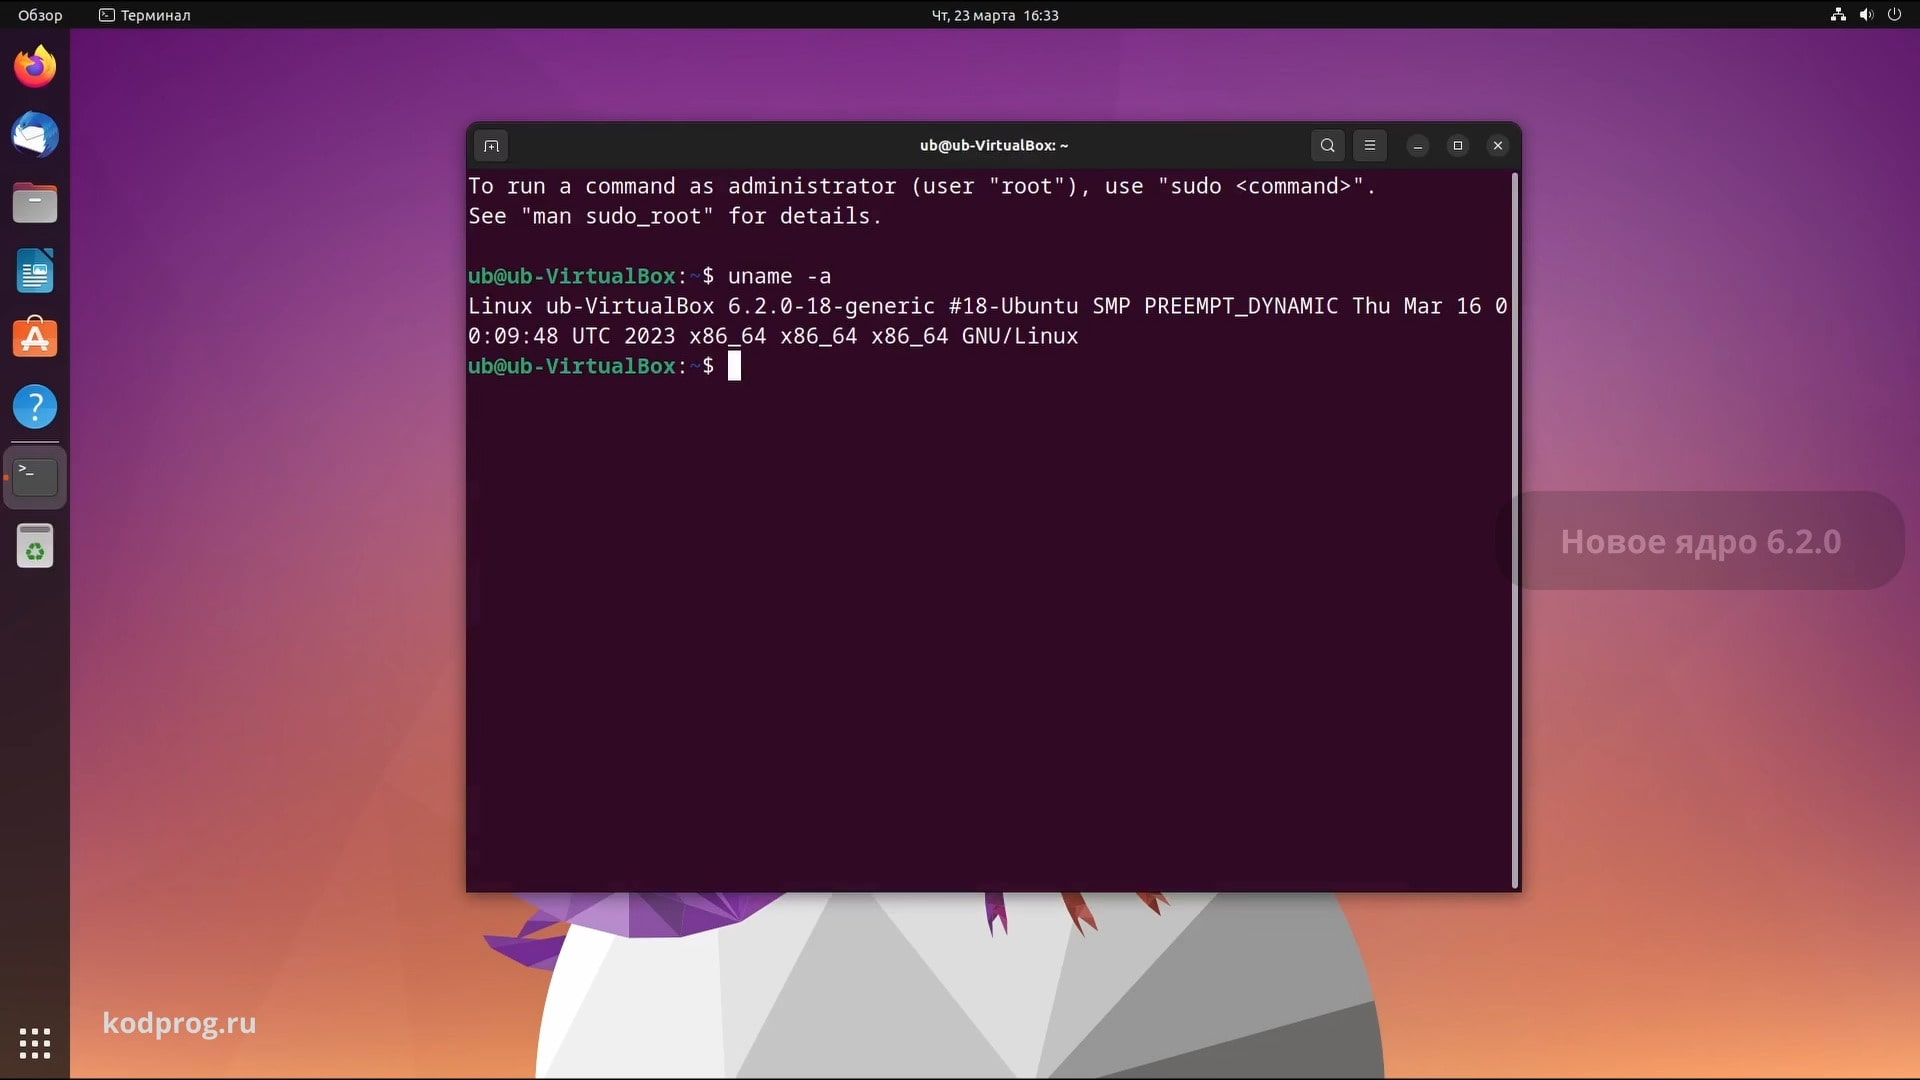 Новая версия ядра 6.2.0 Ubuntu 23.04